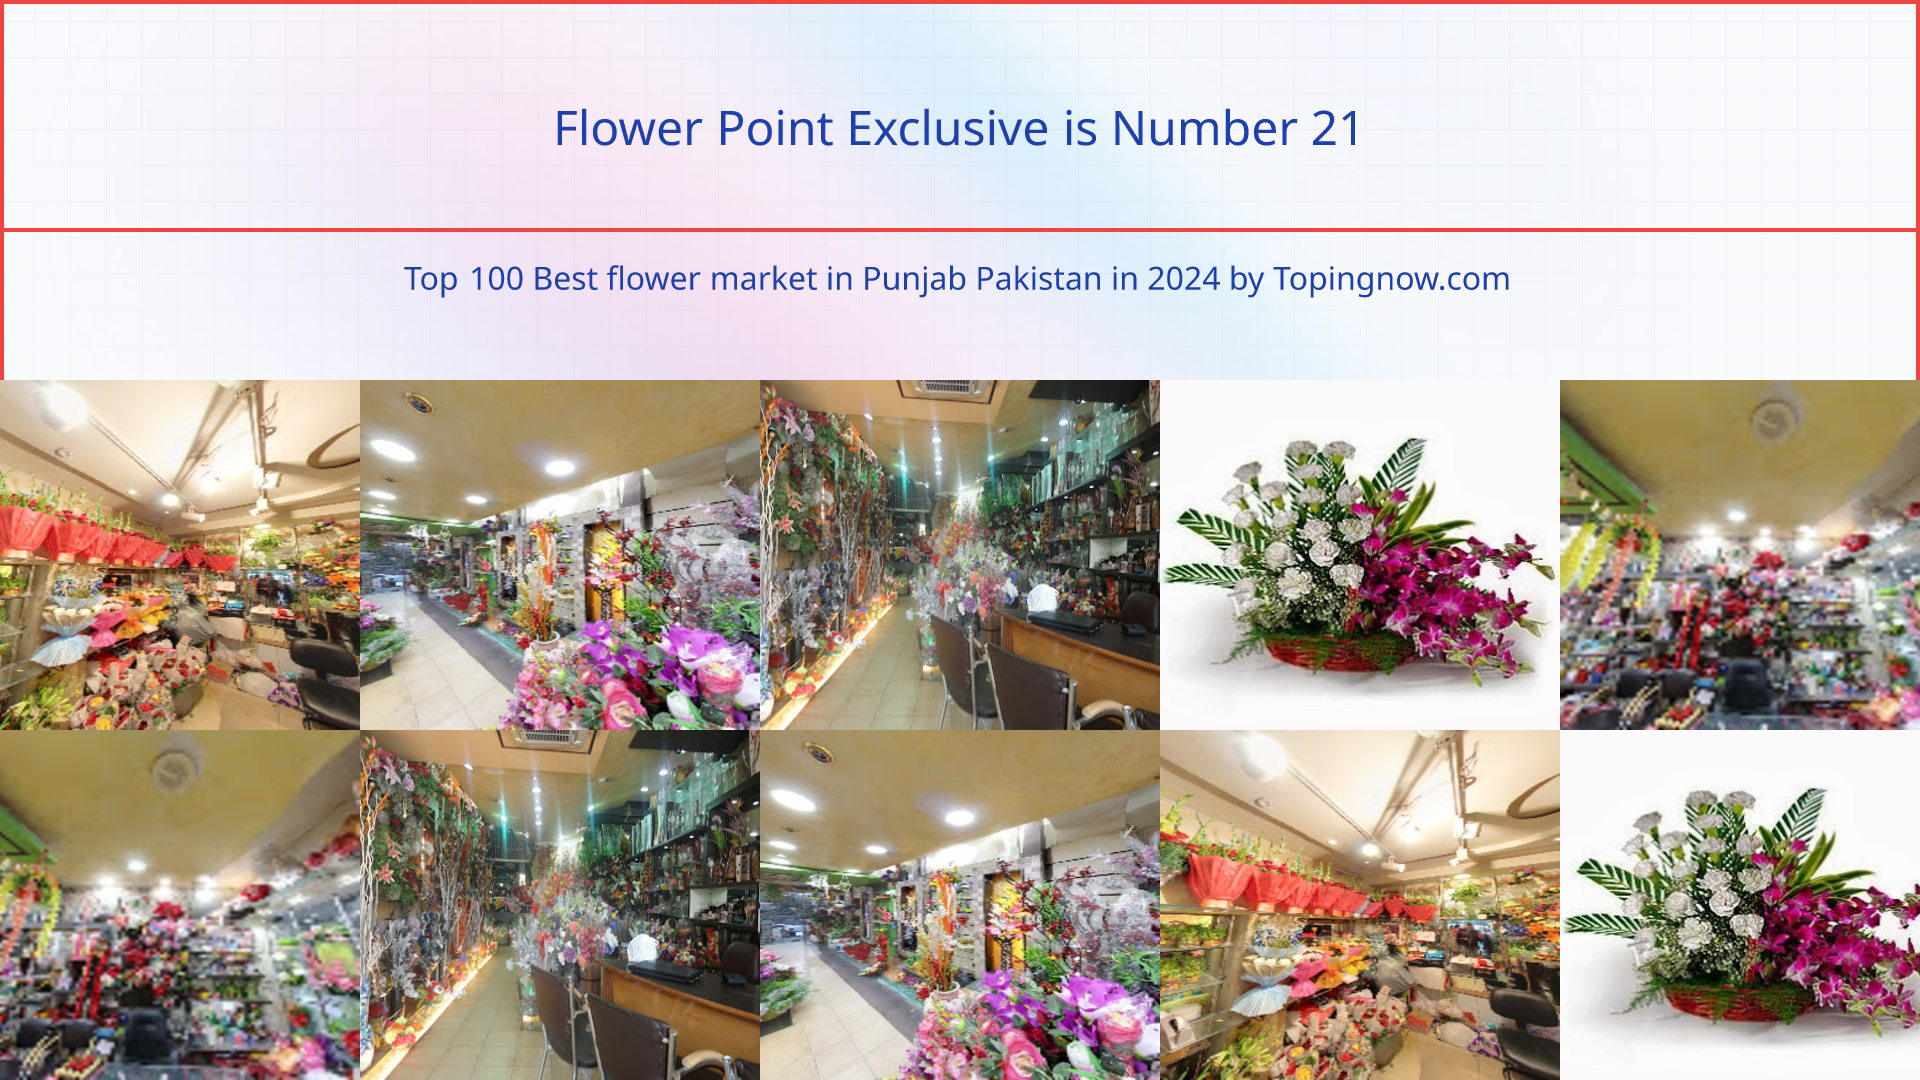 Flower Point Exclusive: Top 100 Best flower market in Punjab Pakistan in 2024